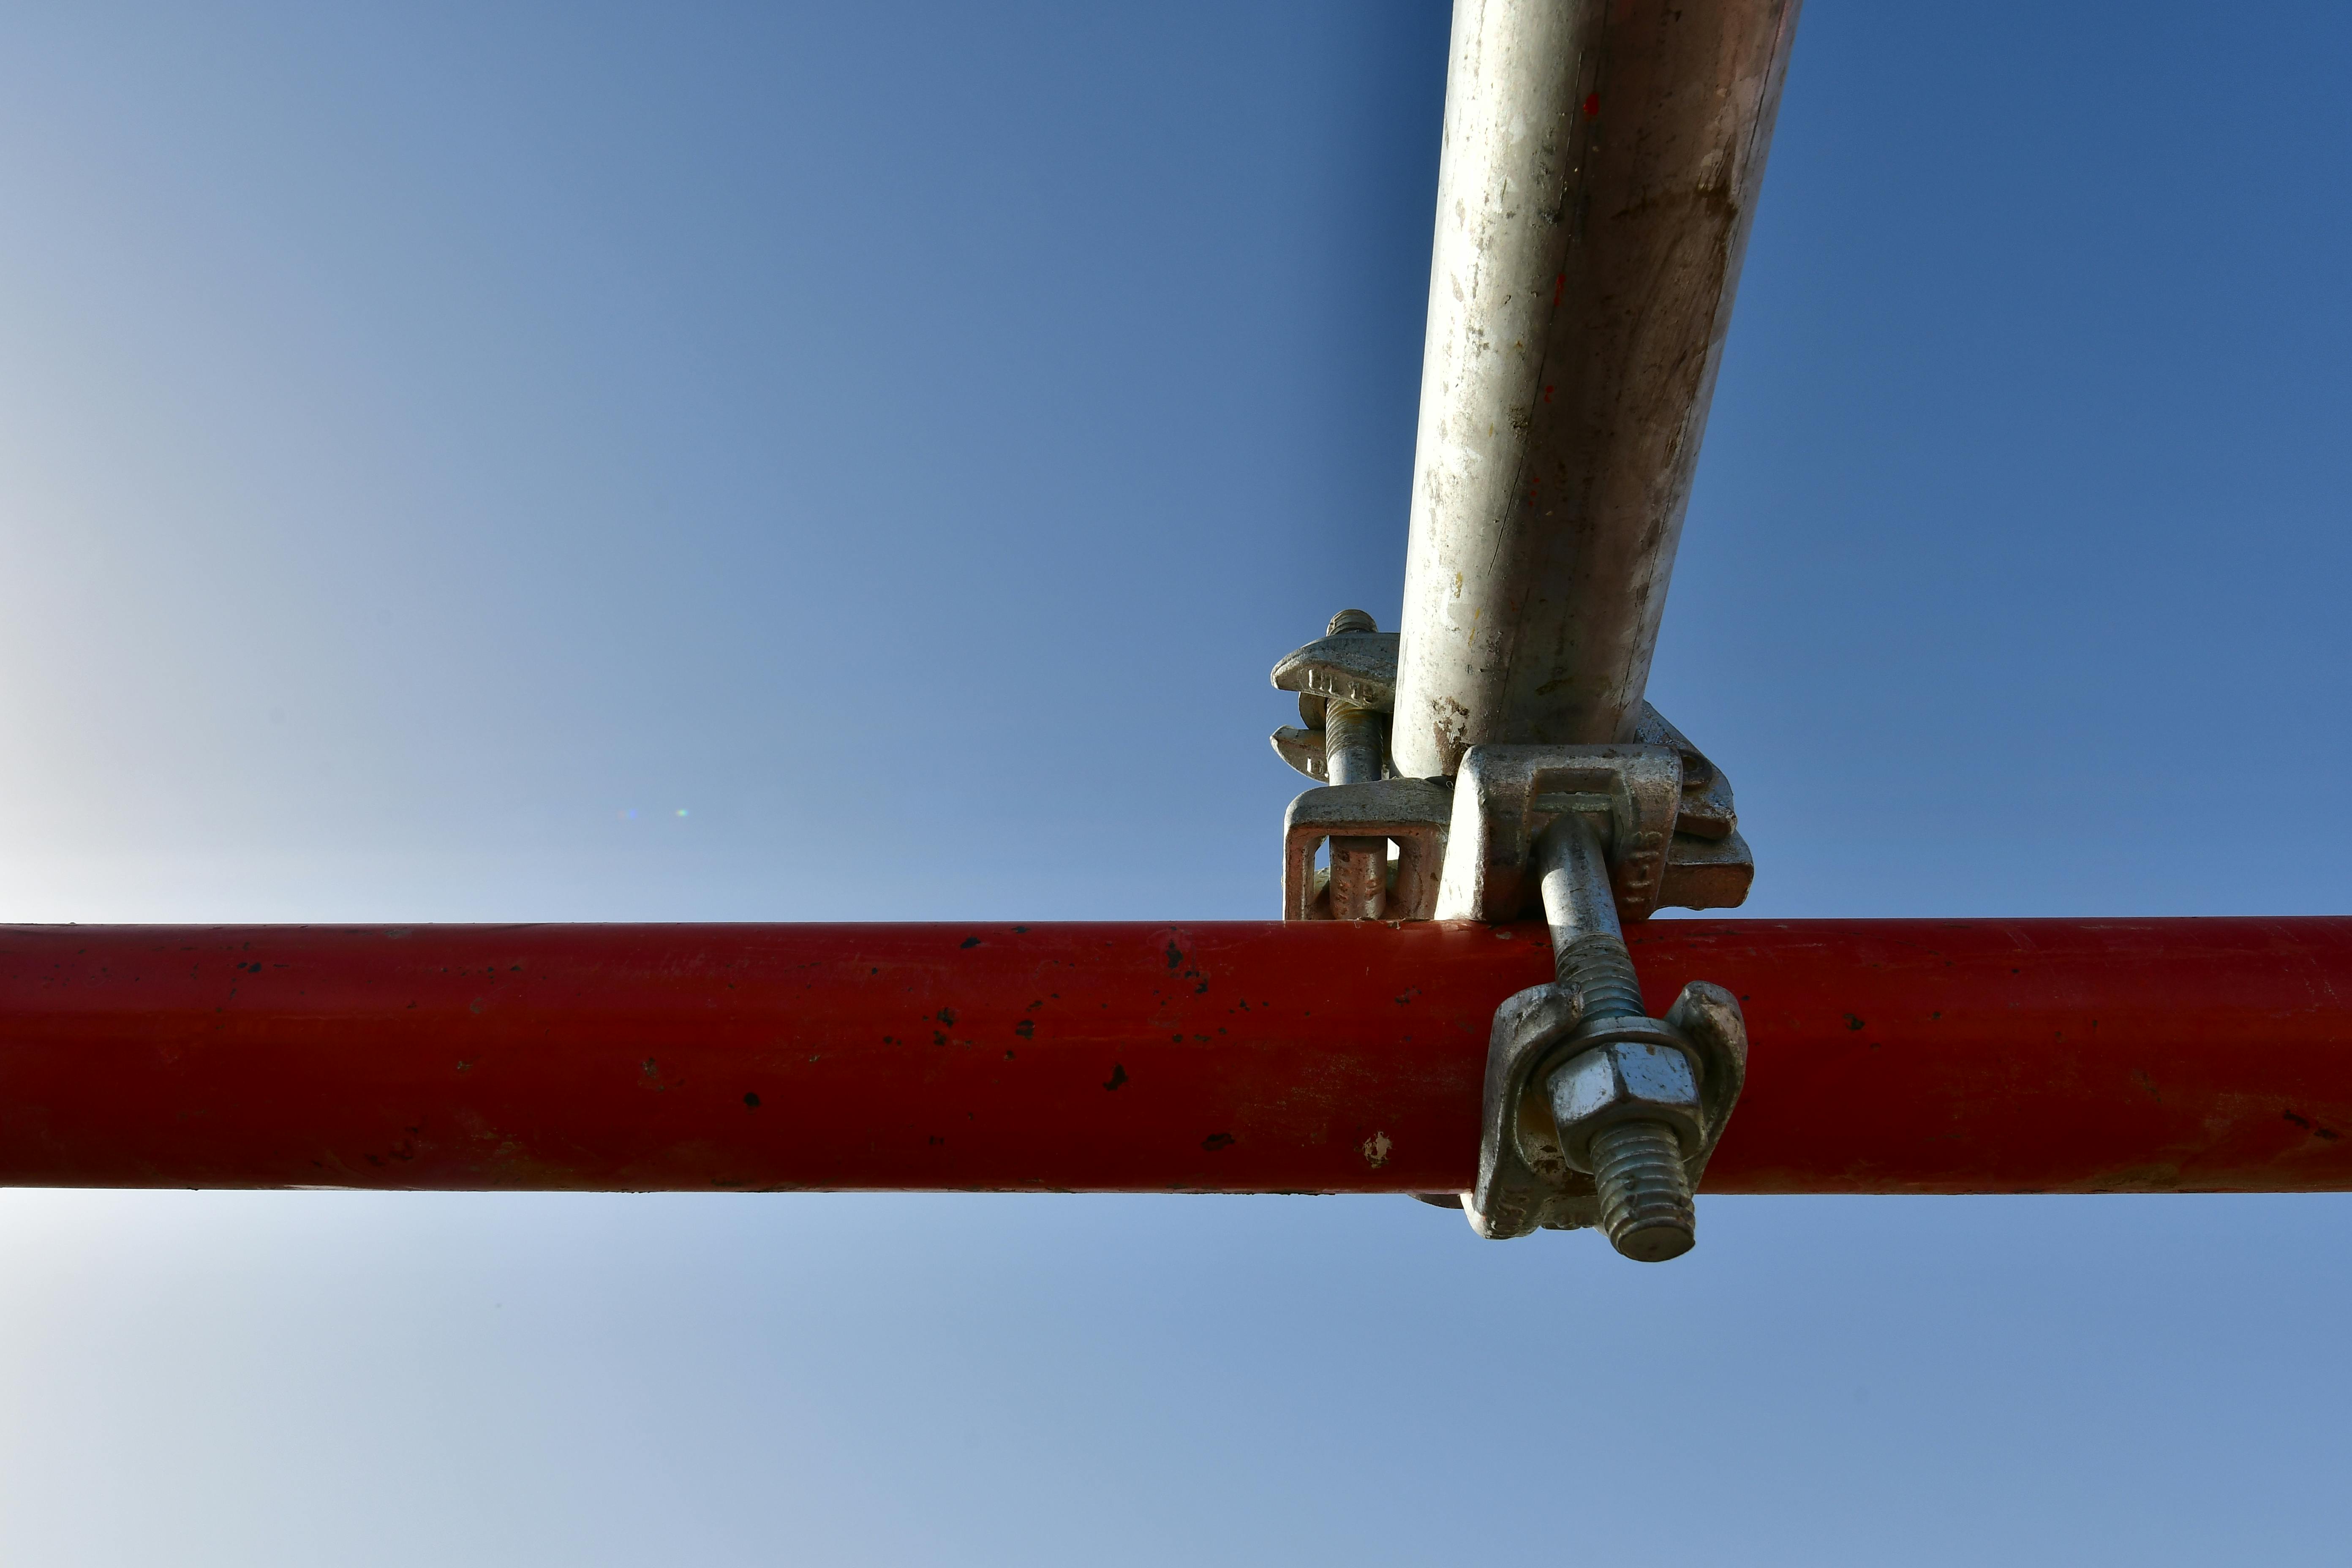 Free stock photo of scaffolding, steel bars, steel railing